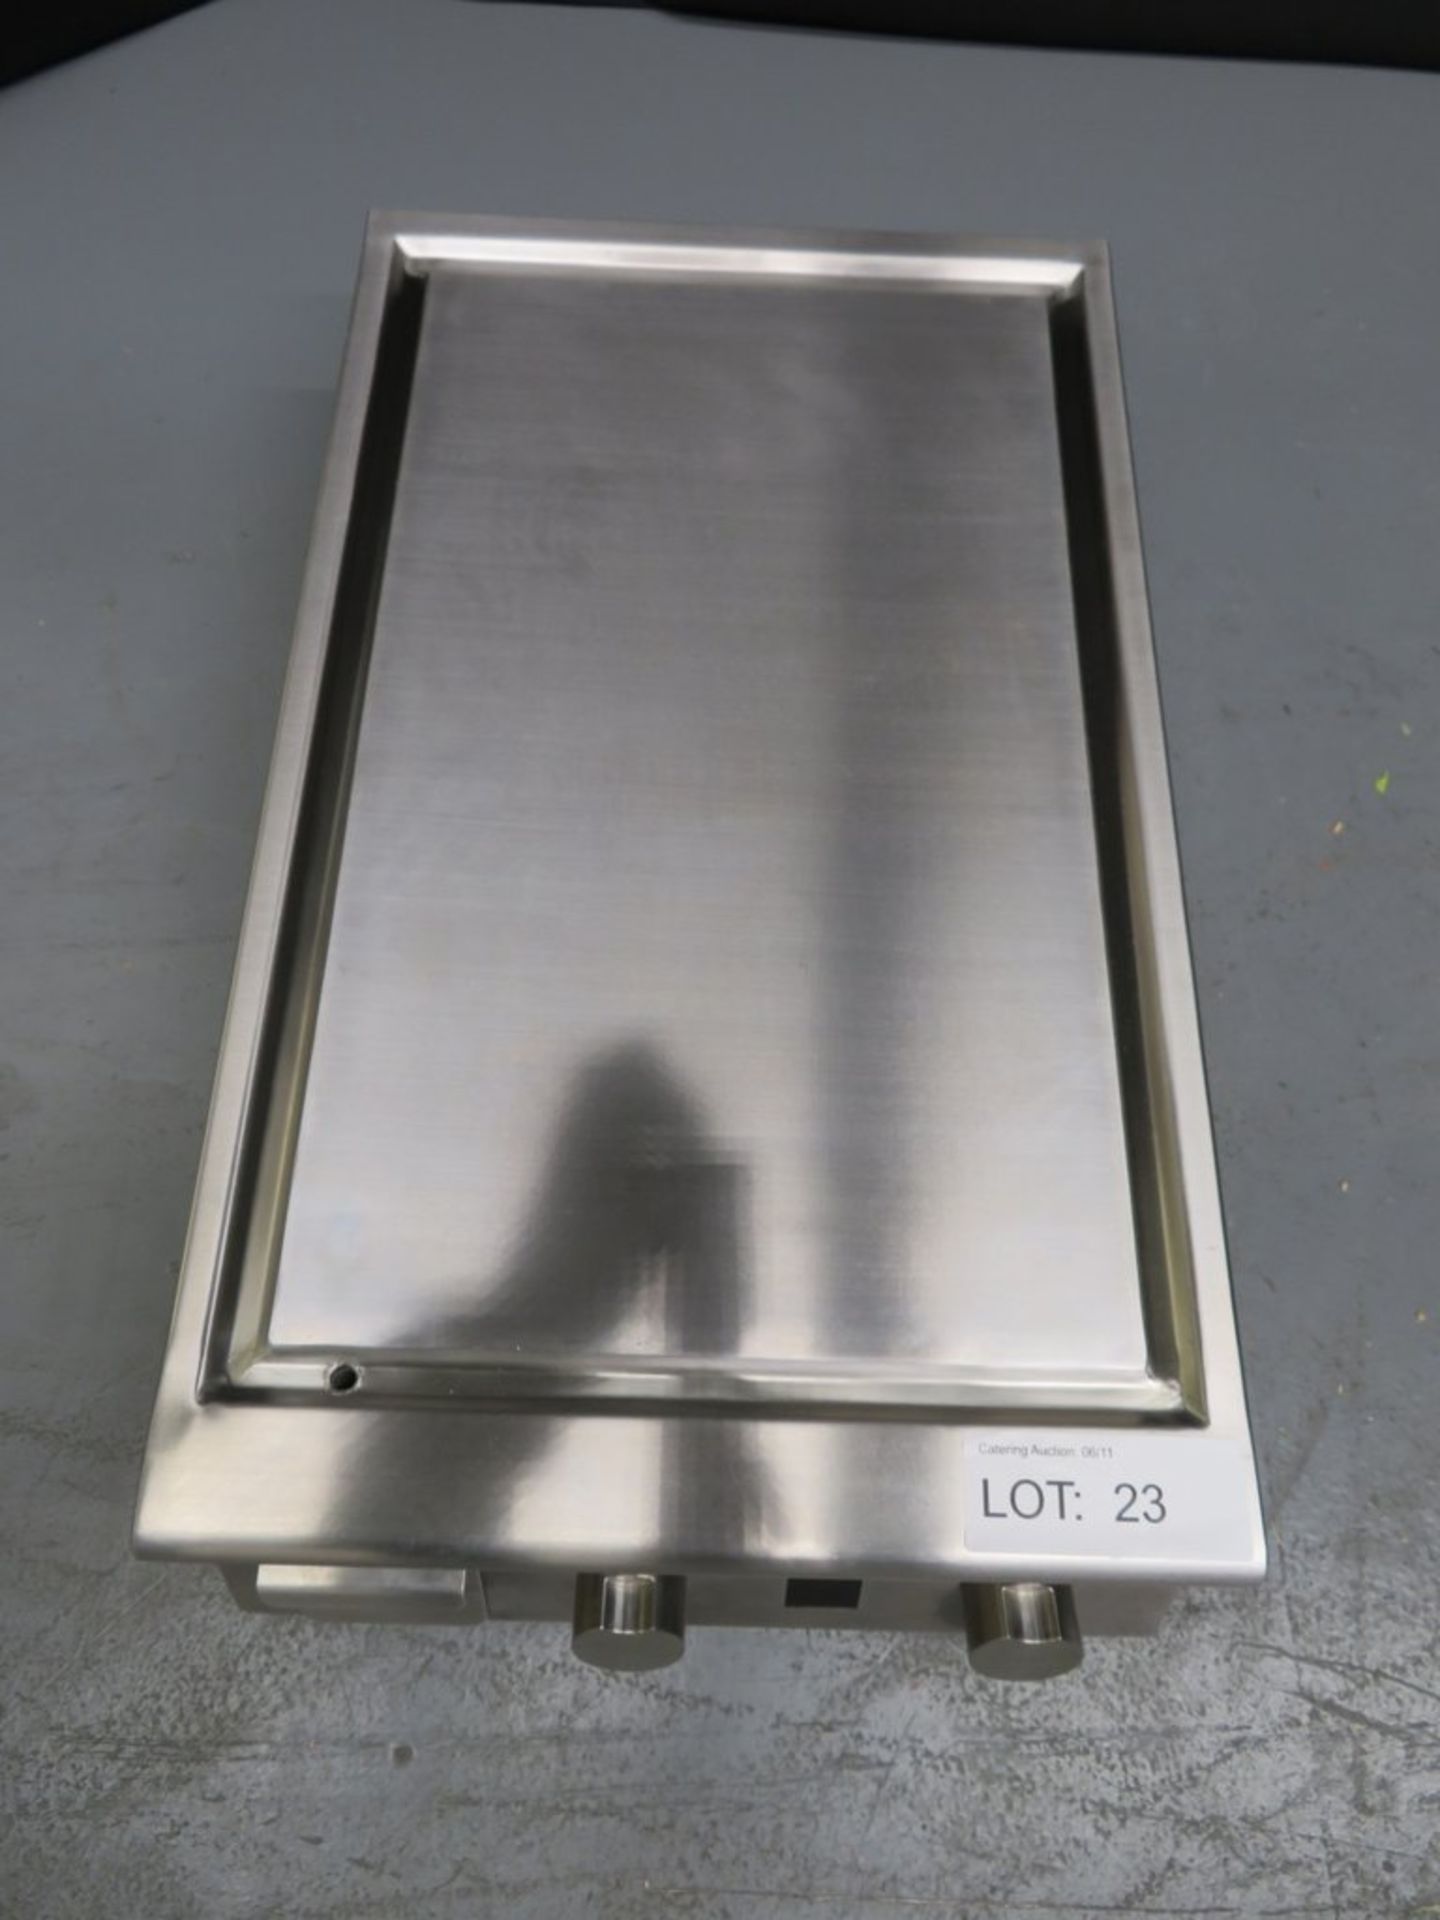 SemiPro countertop induction Teppanyaki, model RMBSTIFT35,1 phase - Image 4 of 7